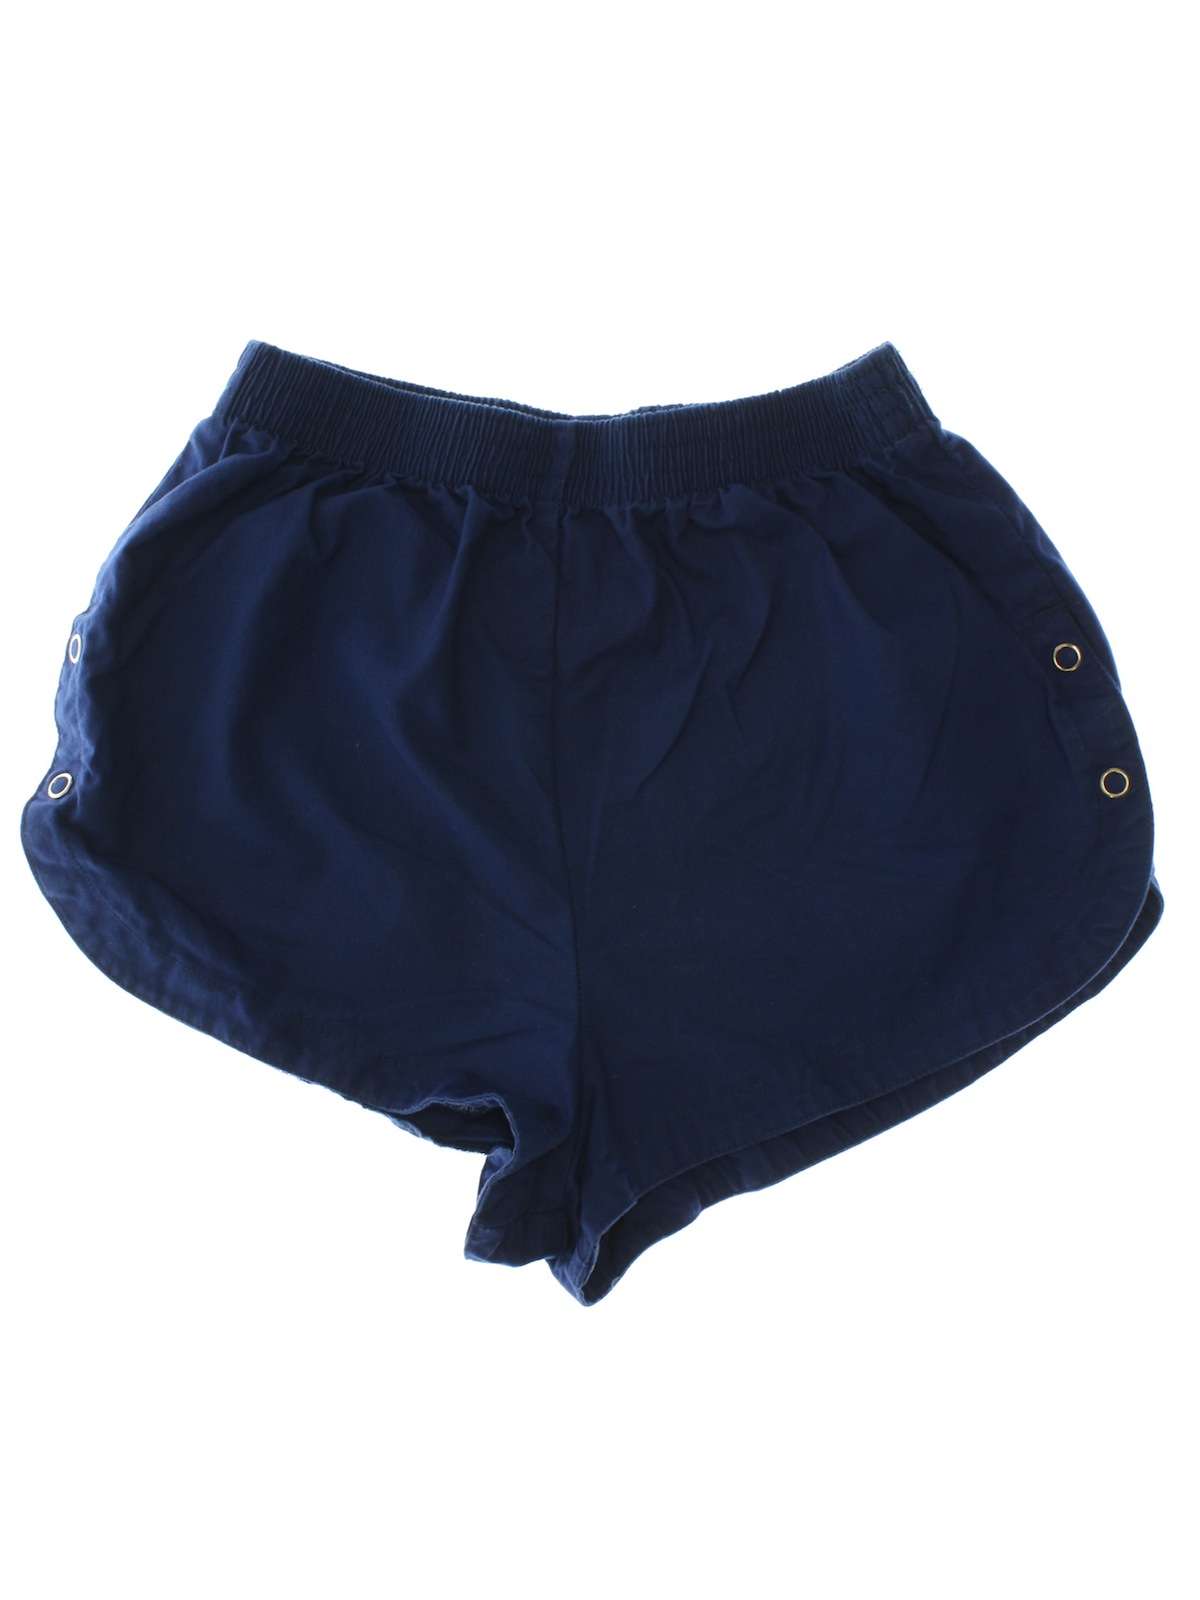 80s Shorts (Tomboy): 80s -Tomboy- Womens blue background cotton blend ...